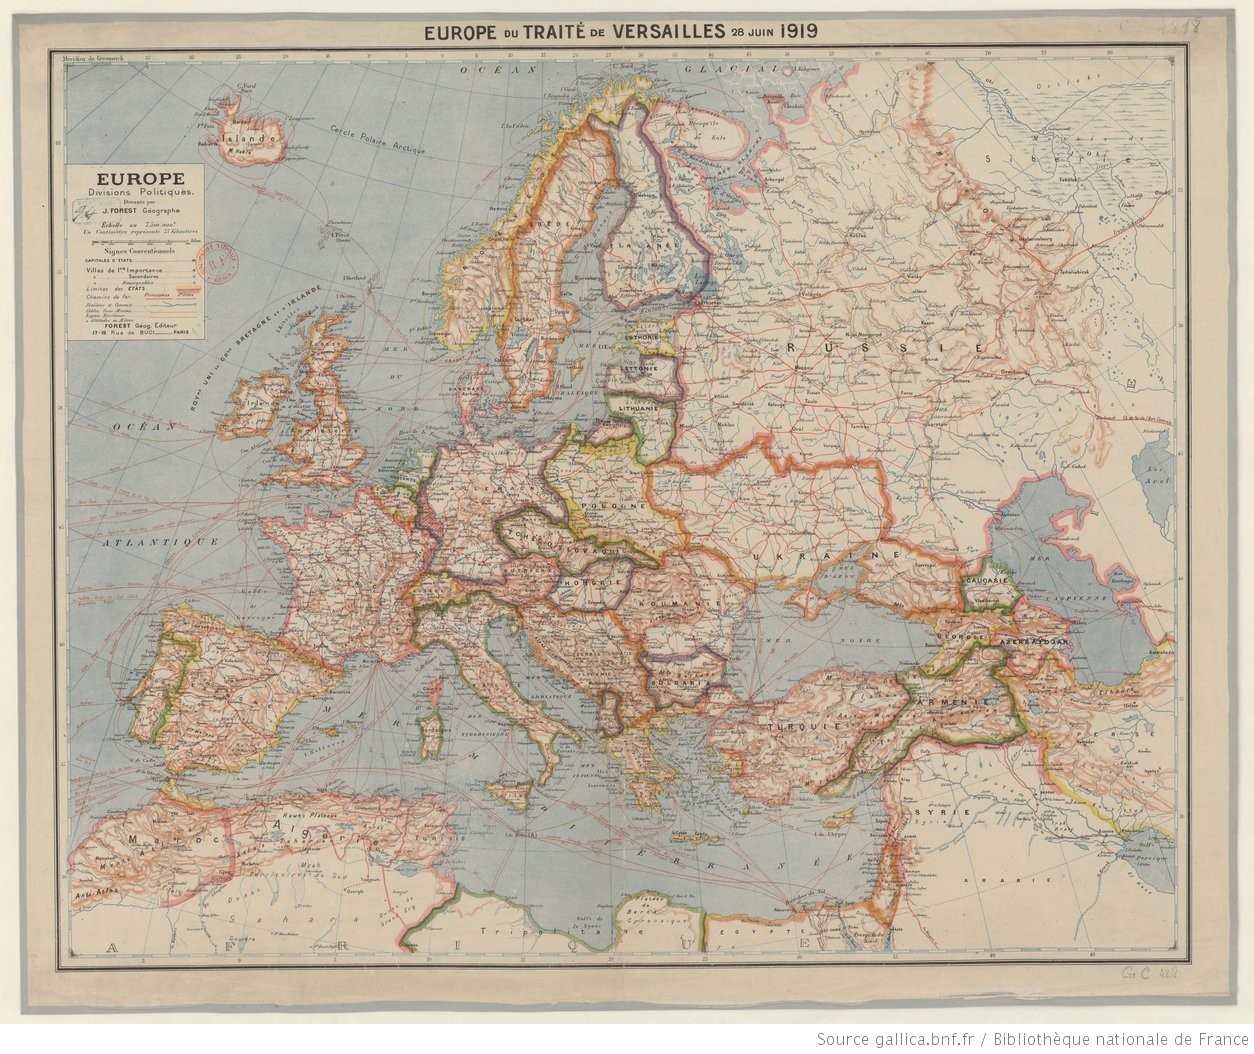 Europa pagal Versalio sutartis 1919 m..jpg